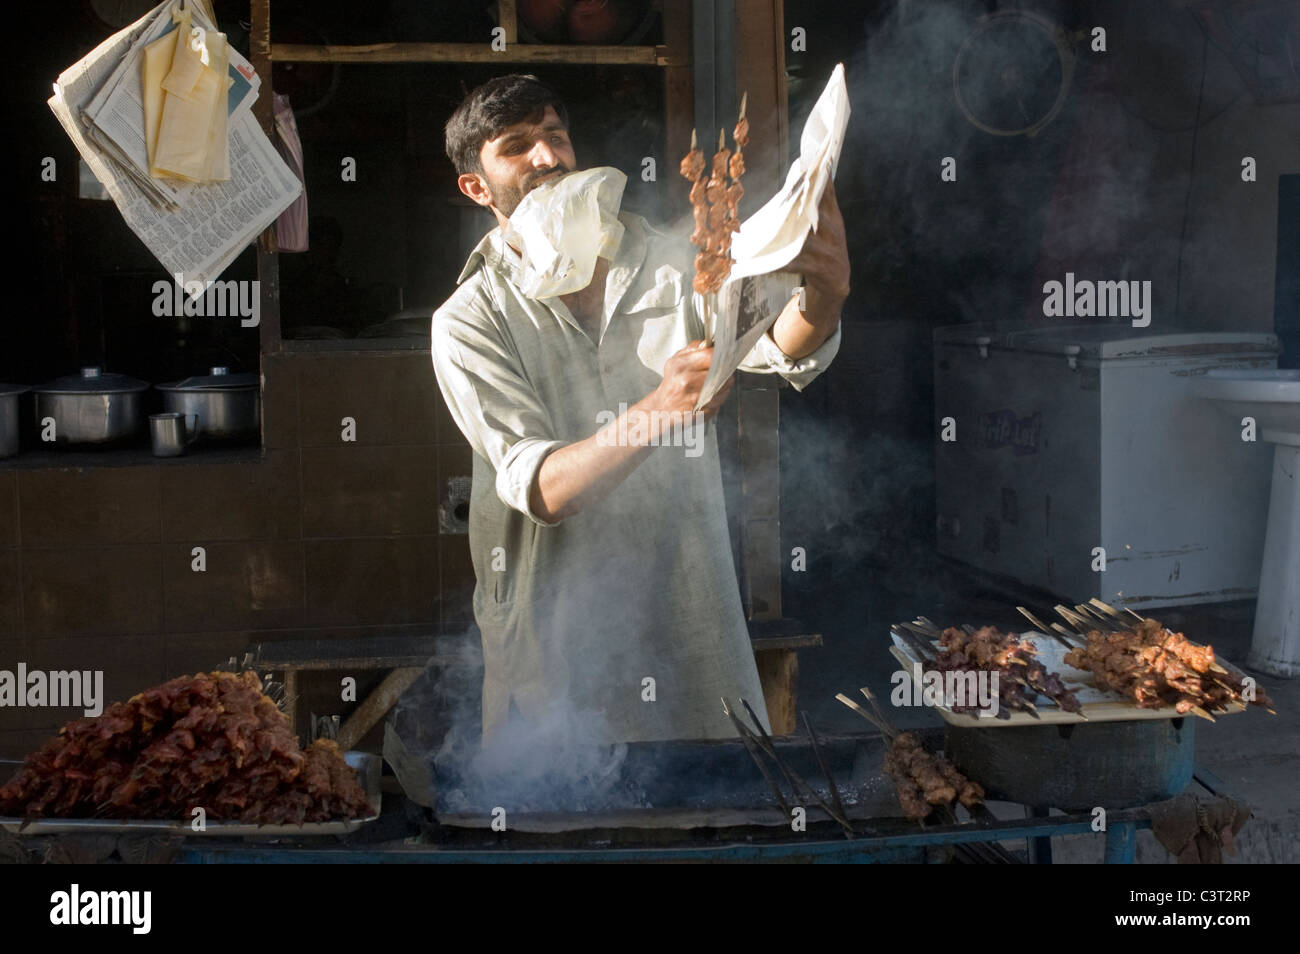 A man prepares food at a shop. Stock Photo